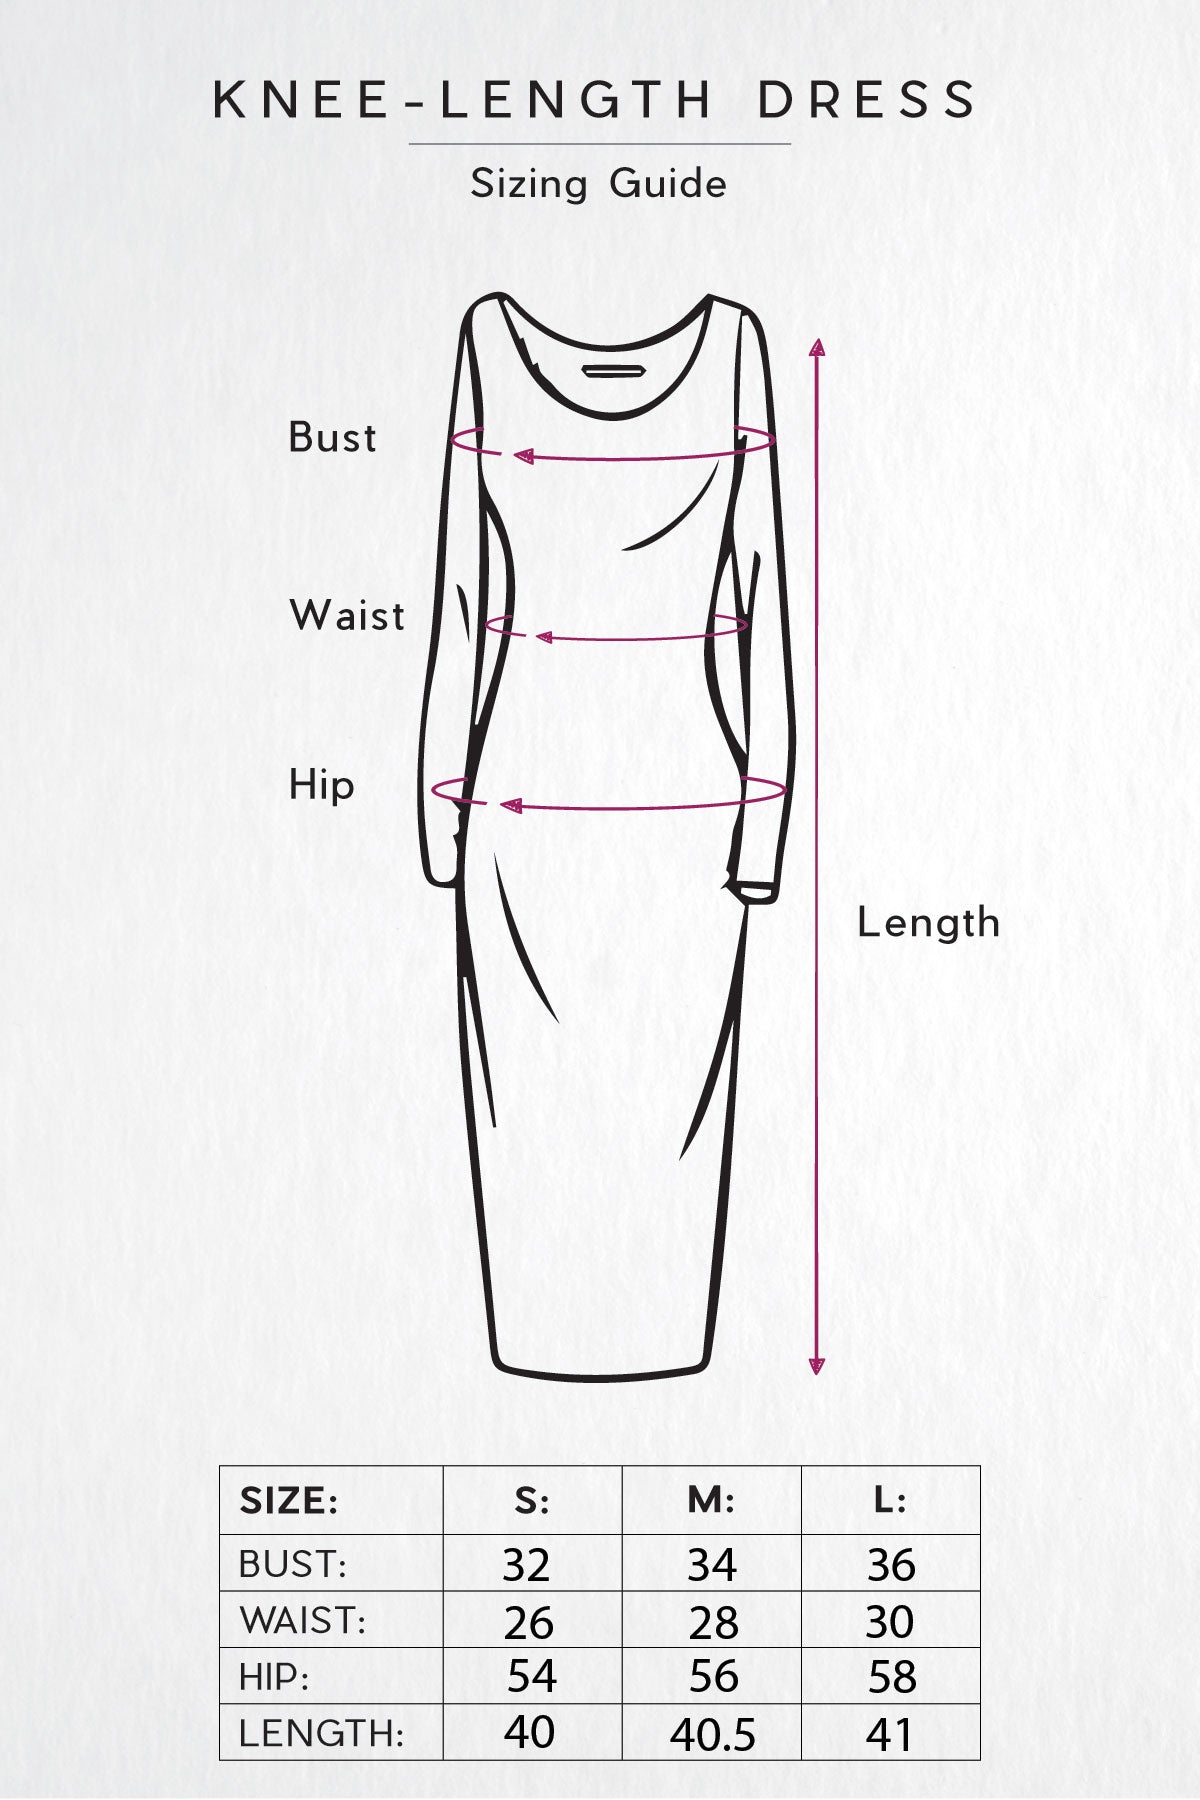 Knee-Length Dress Sizing Guide